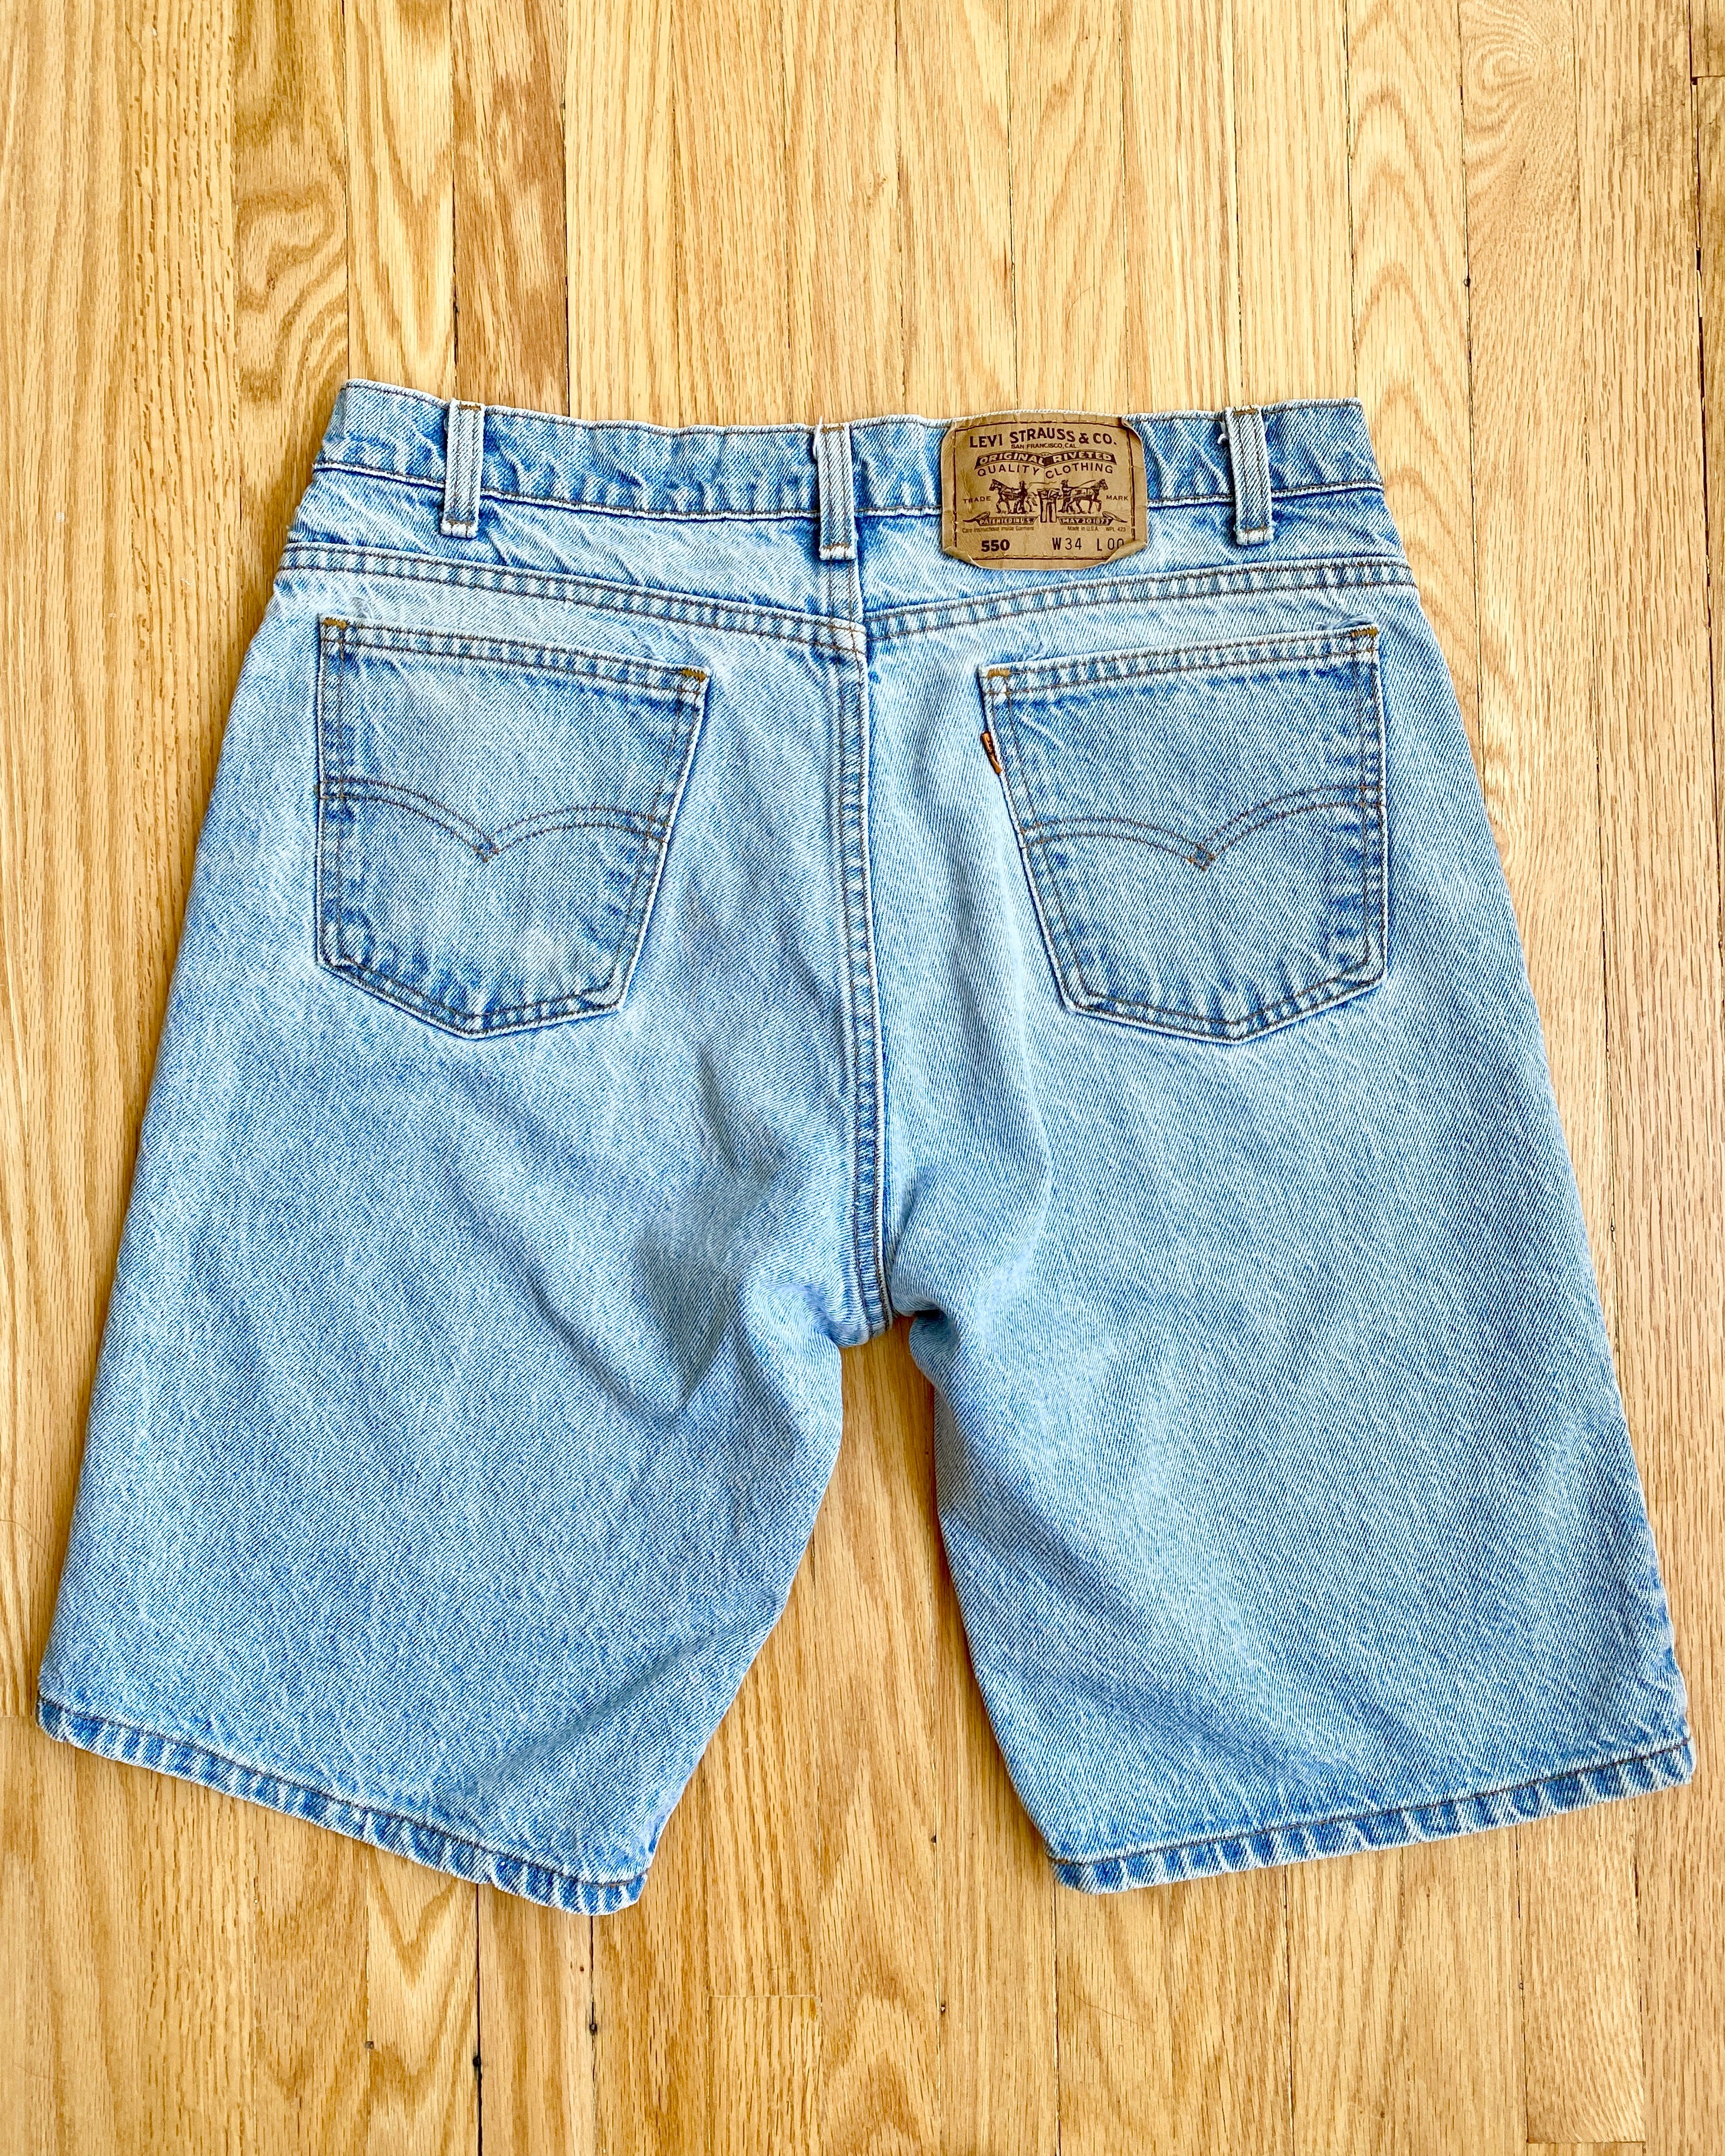 Vintage Levis Orange Tab Jean Shorts Light Wash Size 33